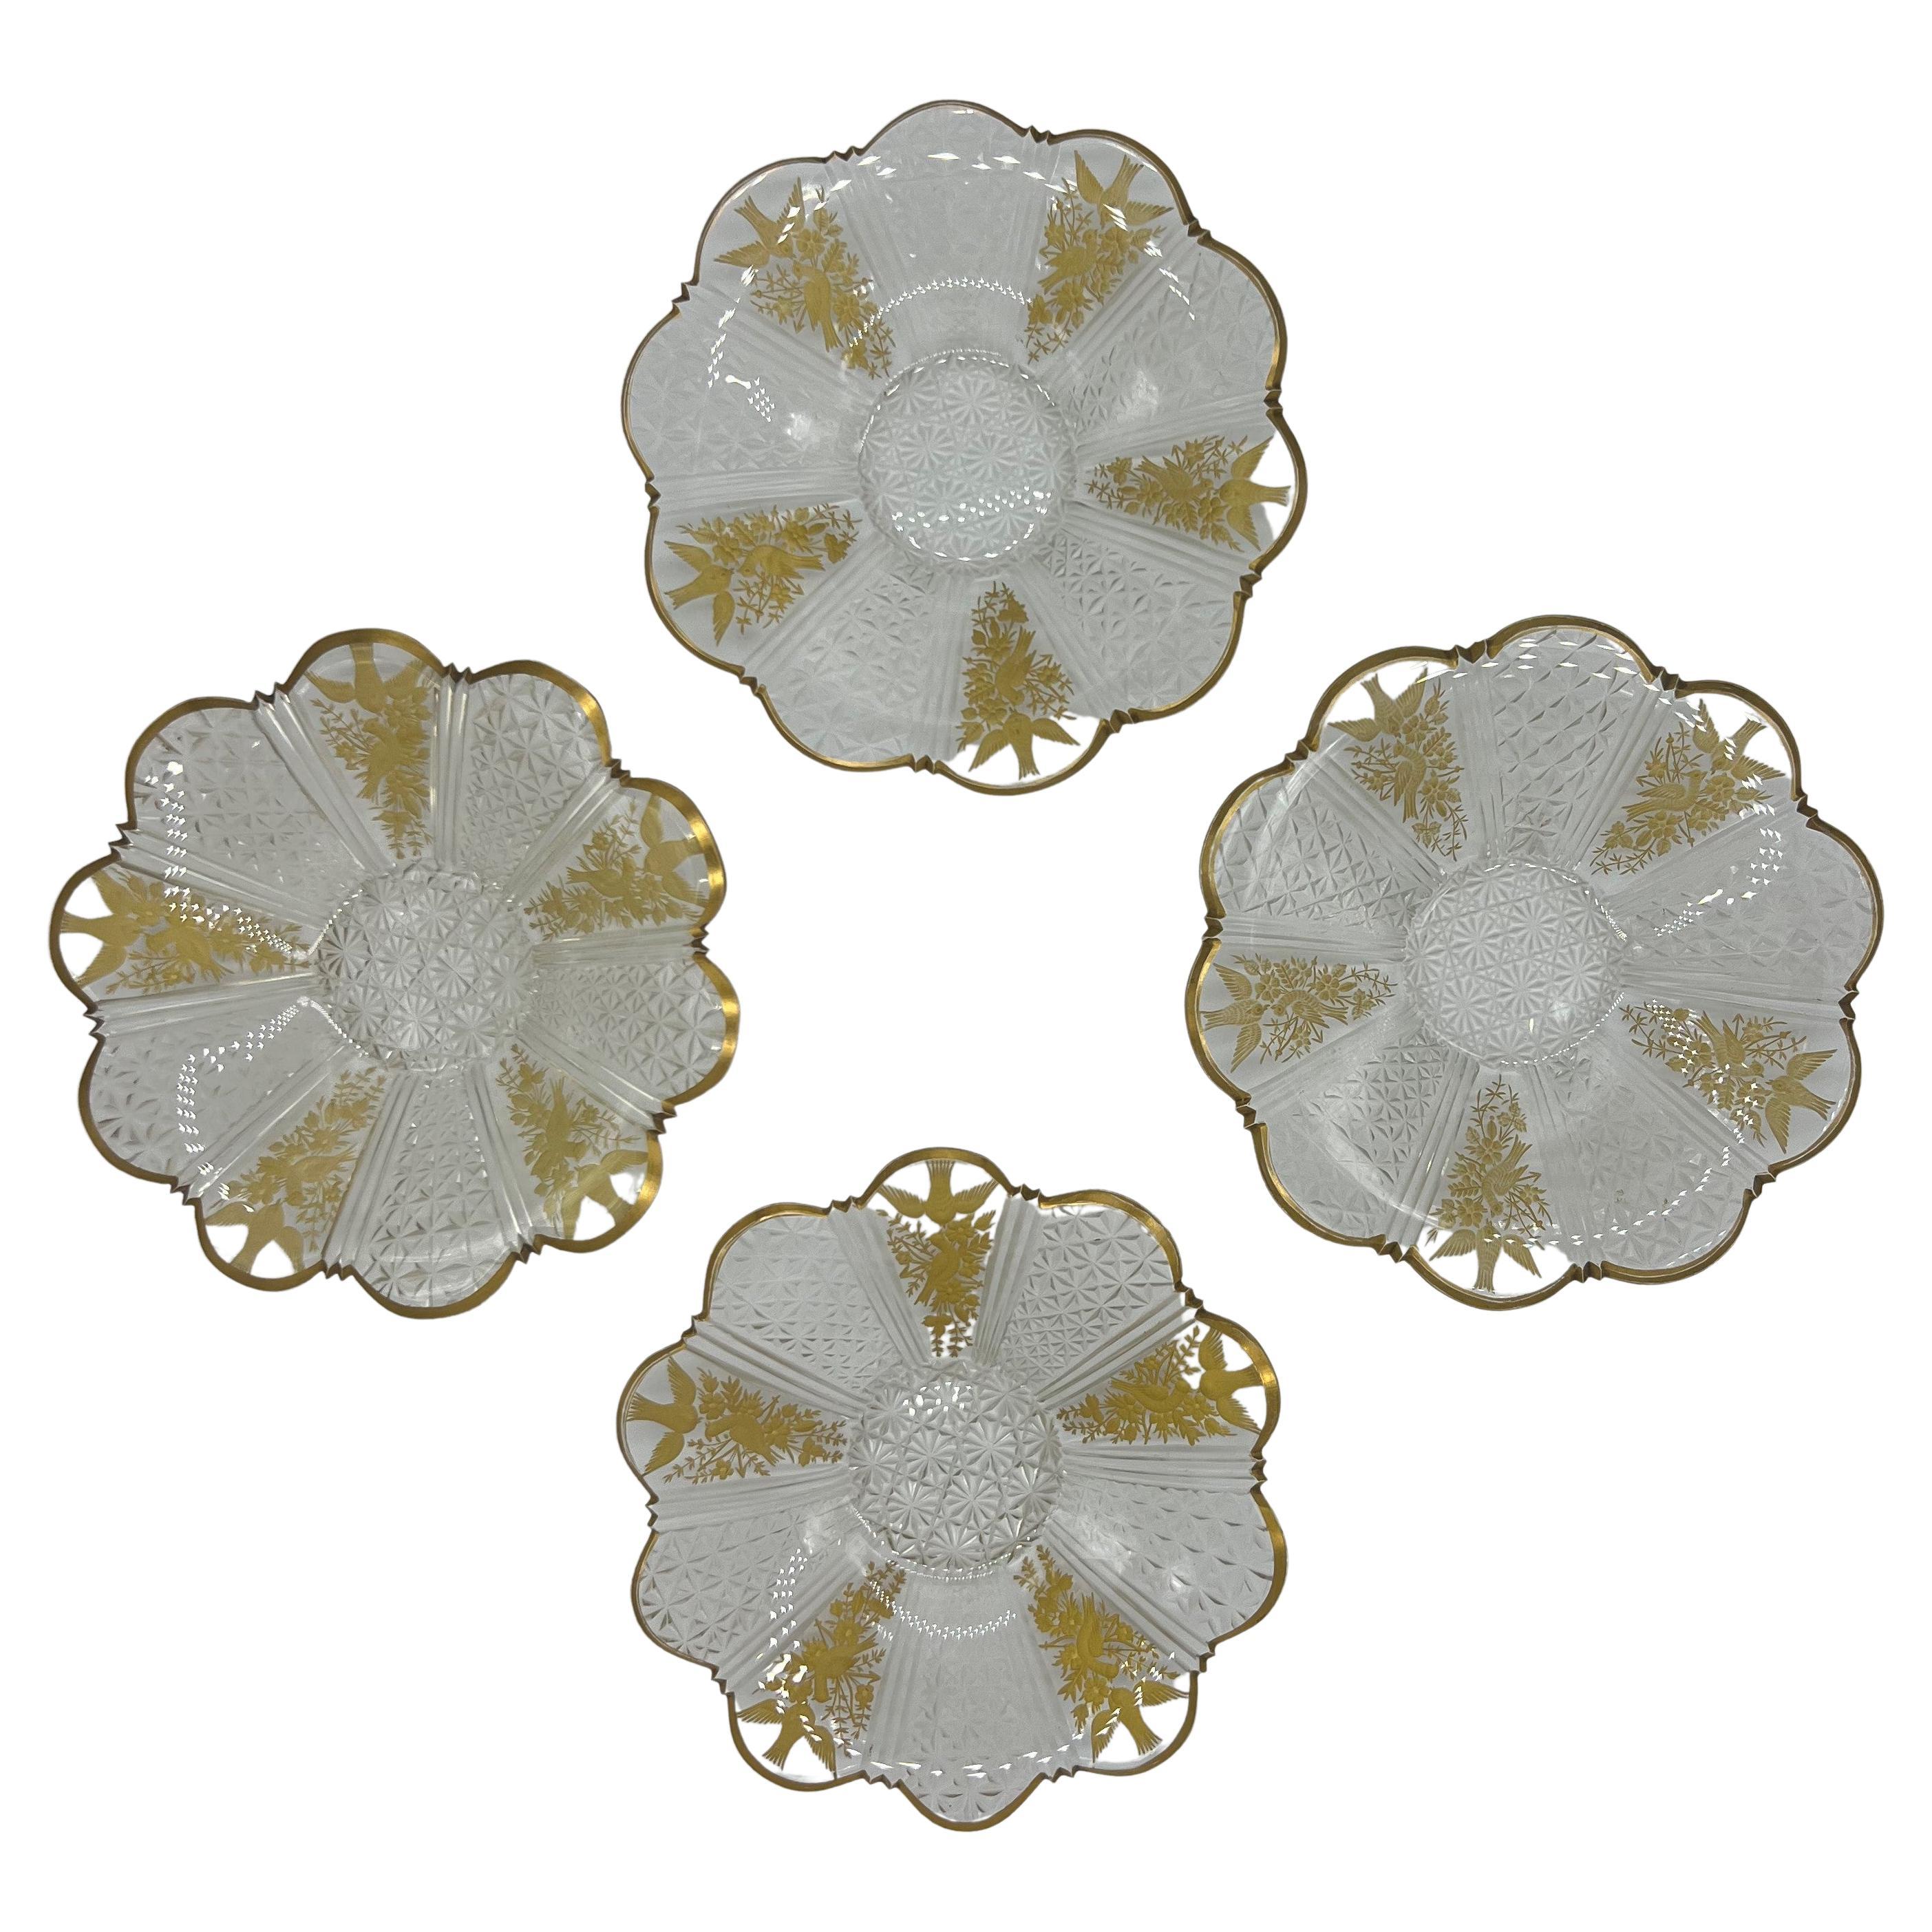 Art Nouveau plate, fine cut, Bohemia, Austria, gilded, set of four plates, bird pattern, good condition.